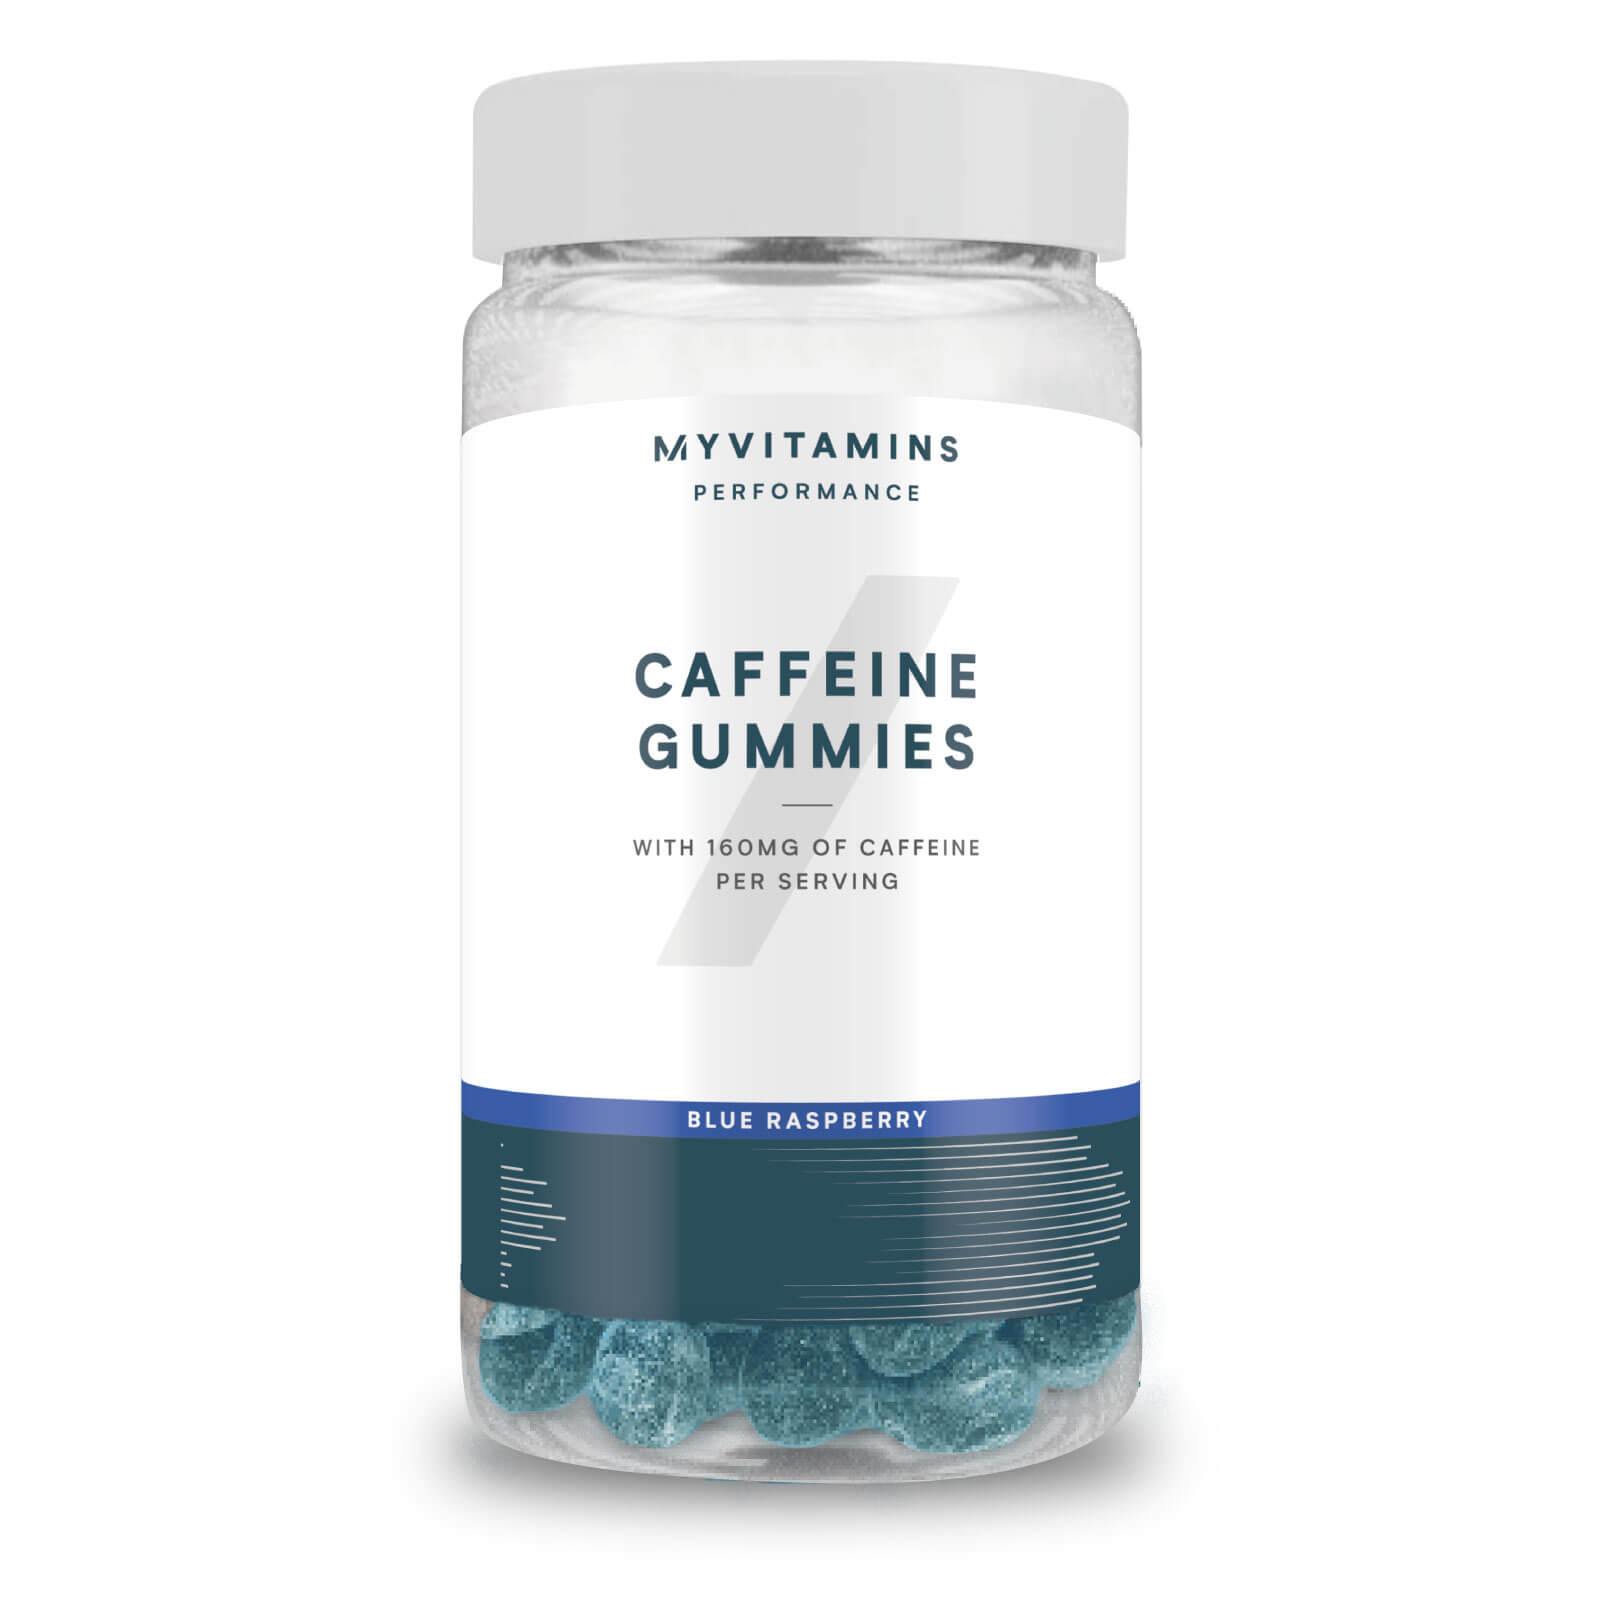 Gomas de Cafeína - 60gummies - Framboesa azul